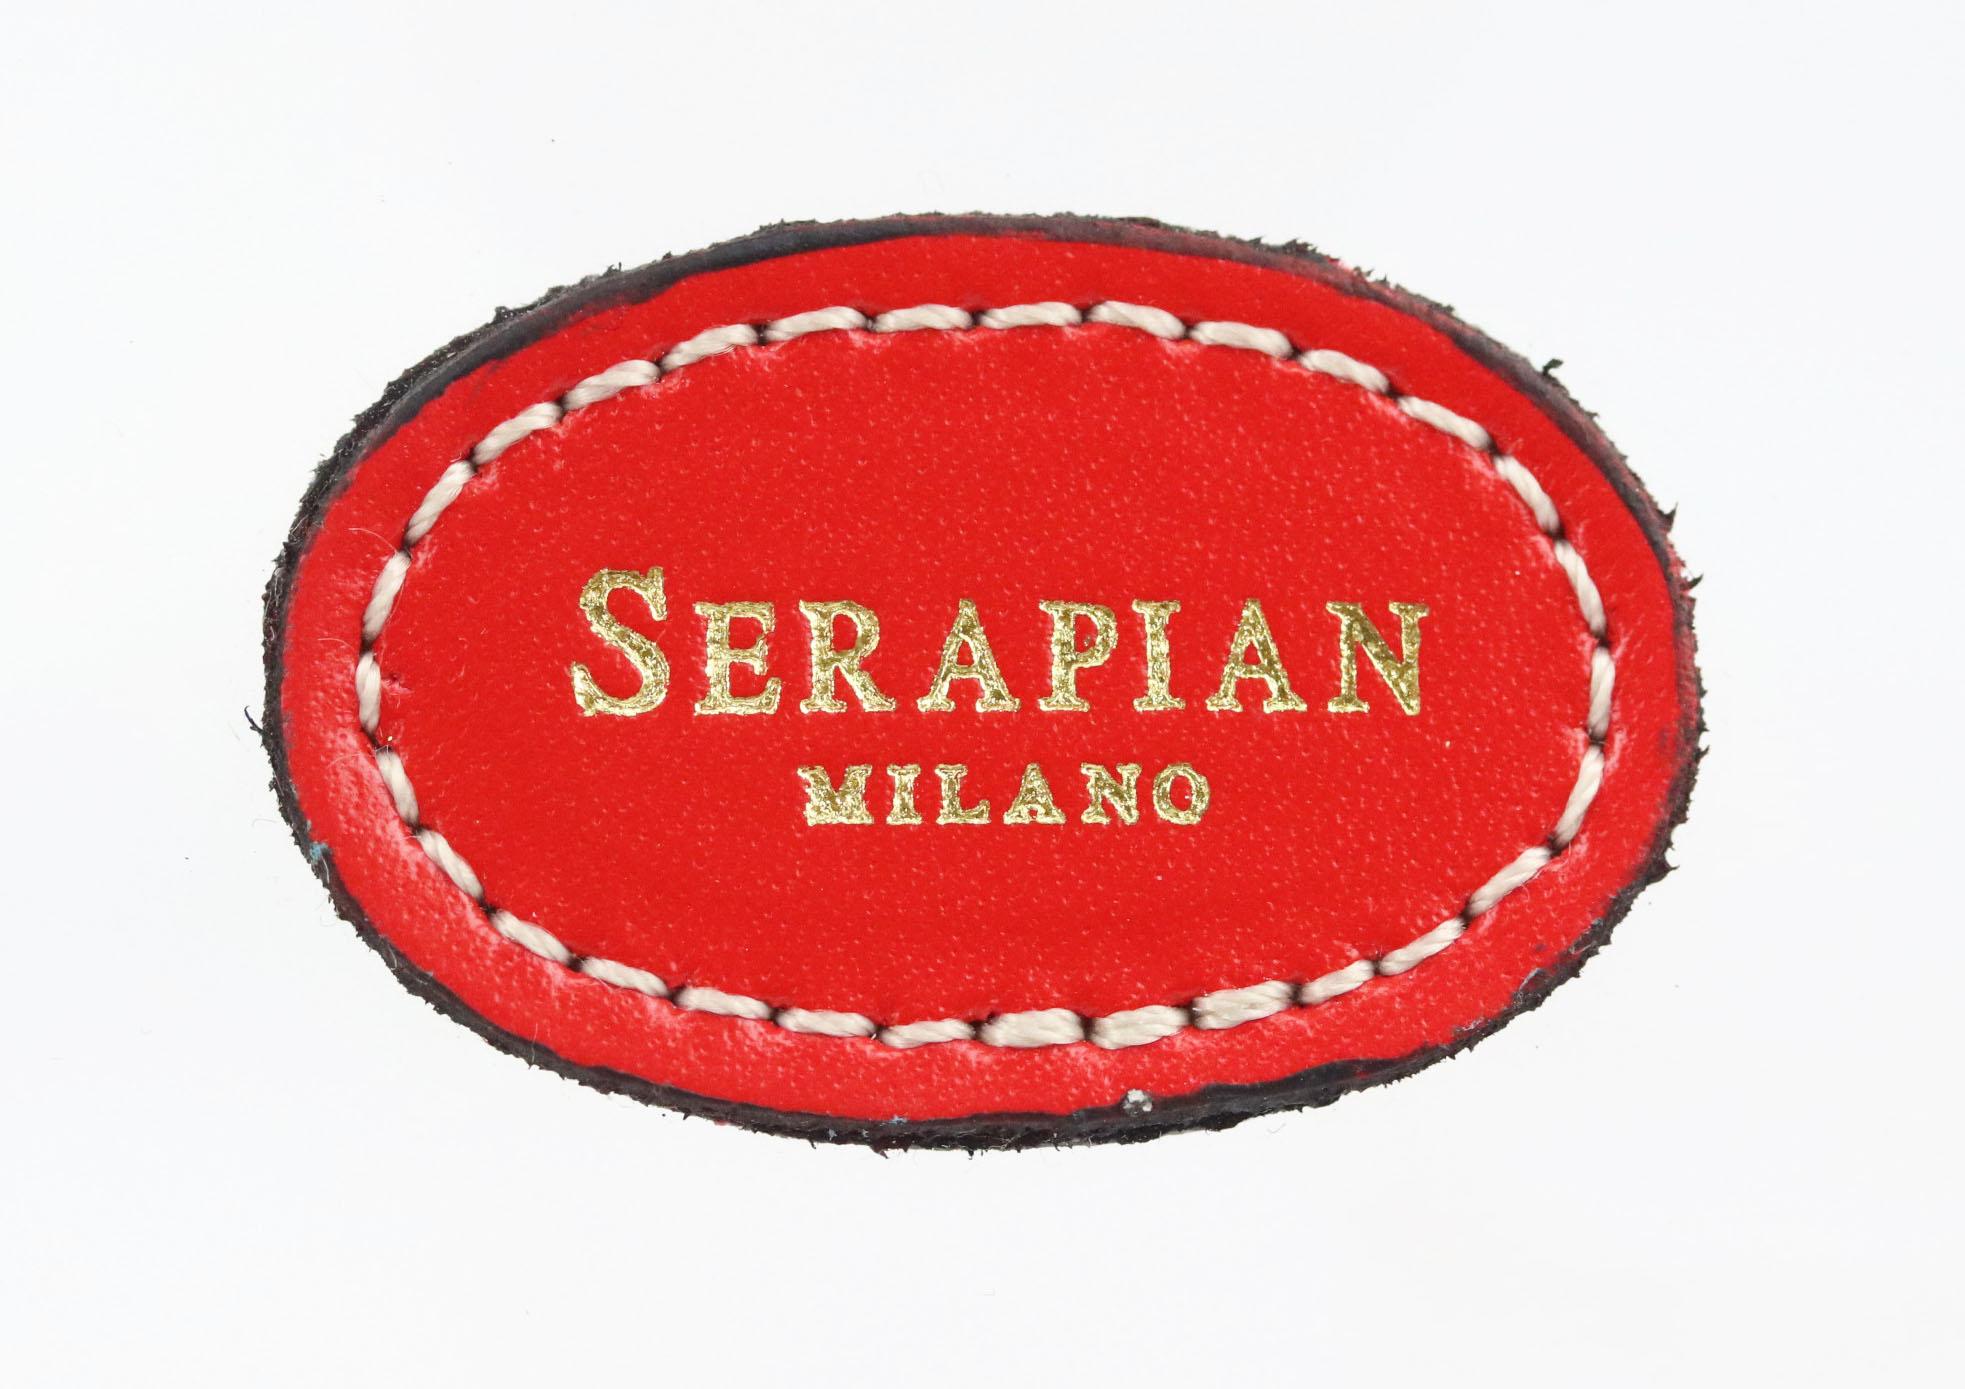 serapian accessories inspired